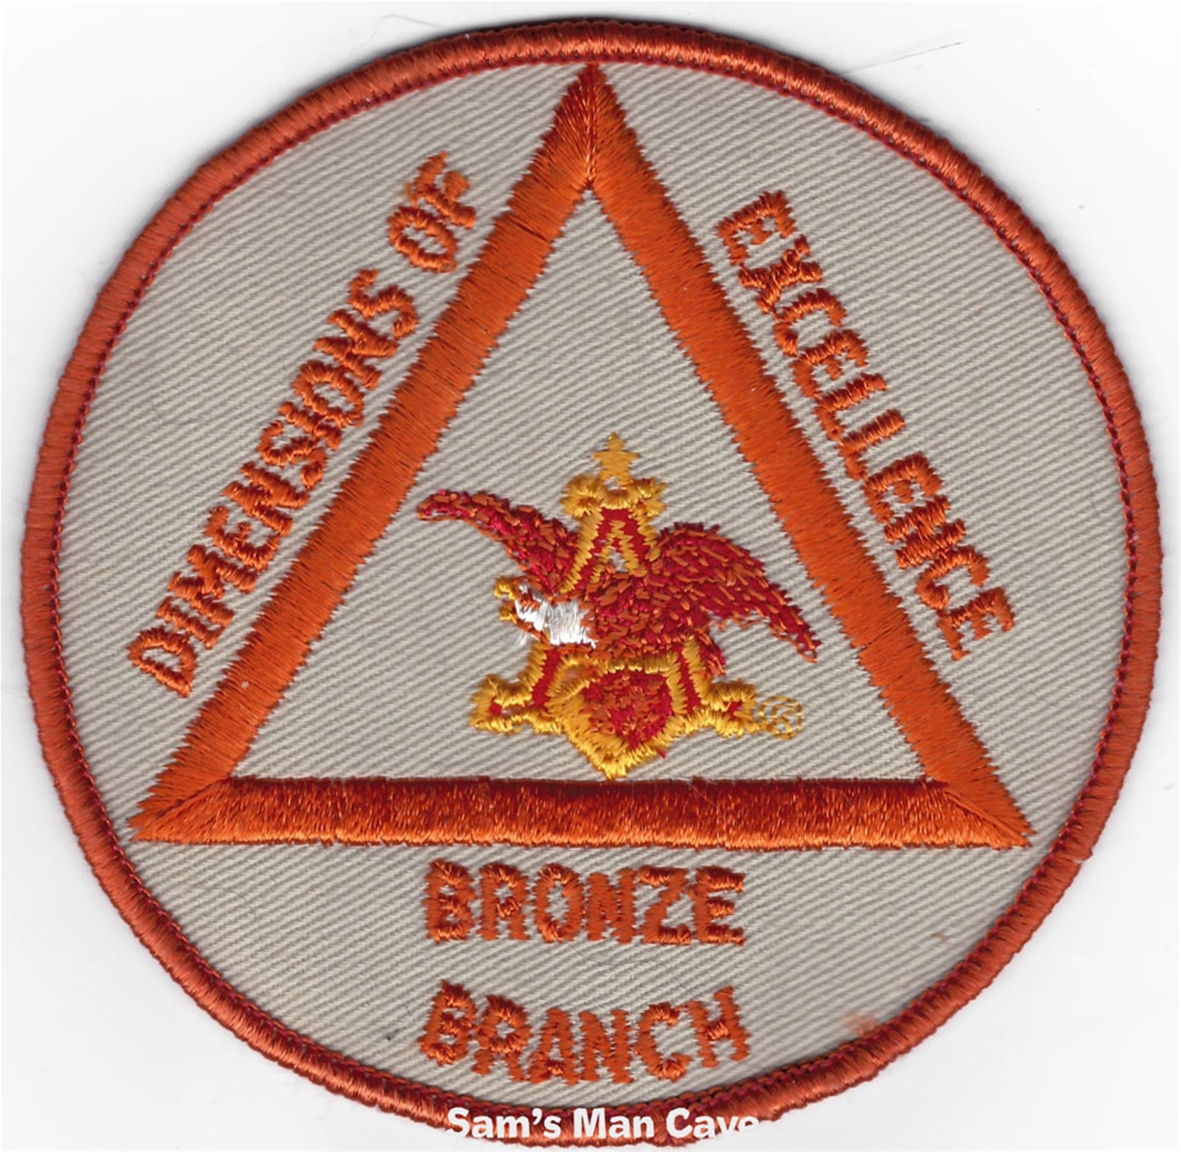 Anheuser-Busch Bronze Branch Patch